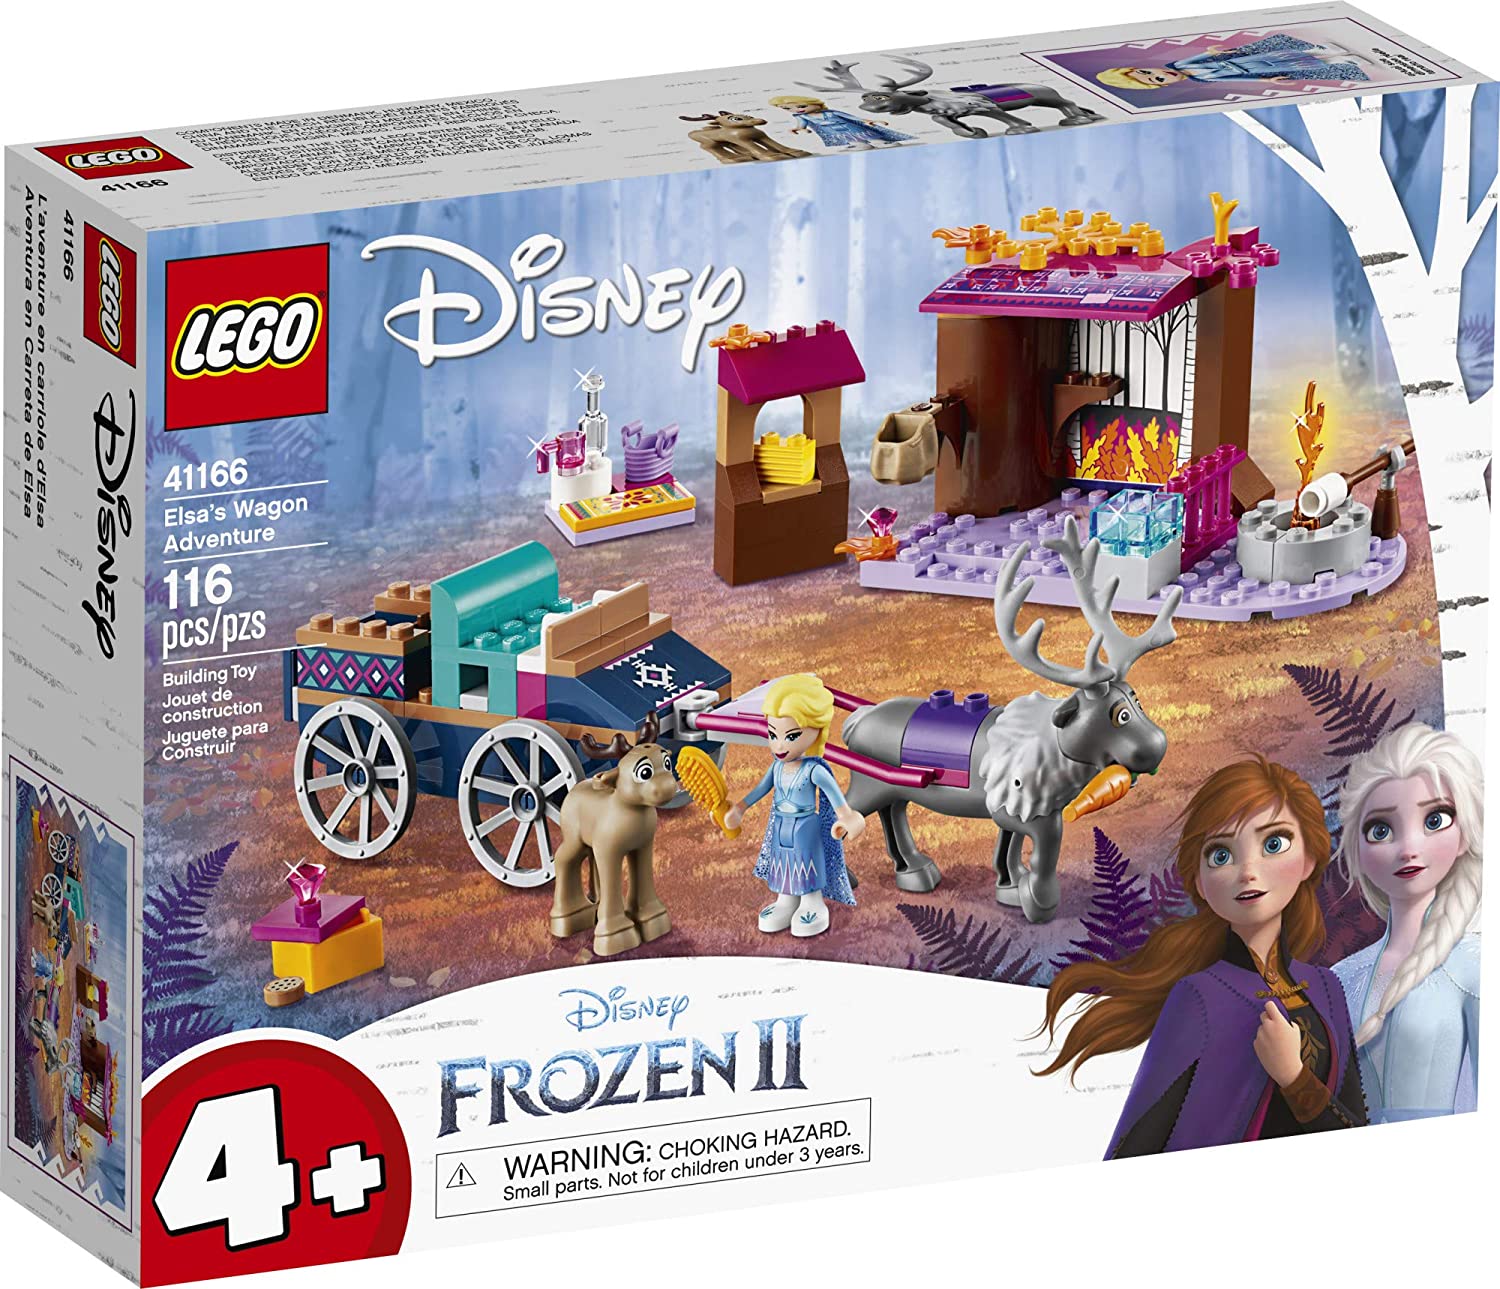 LEGO Disney Frozen II 41166 Elsa's Wagon Adventure 116 Piece Building Kit